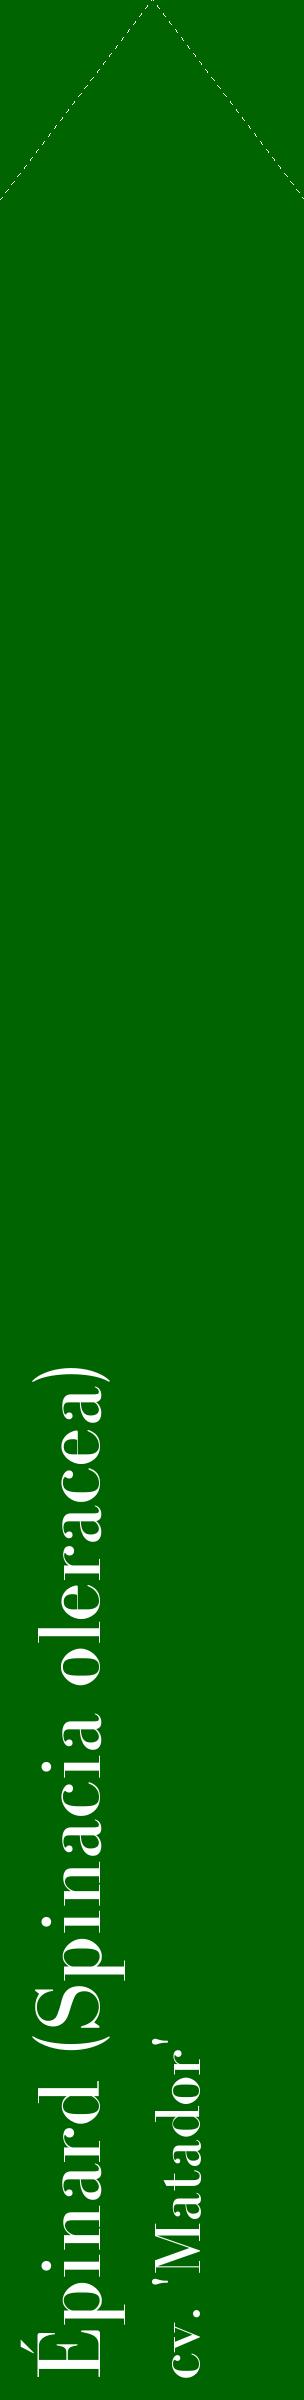 Étiquette de : Spinacia oleracea cv. 'Matador' - format c - style blanche8_simplebod avec comestibilité